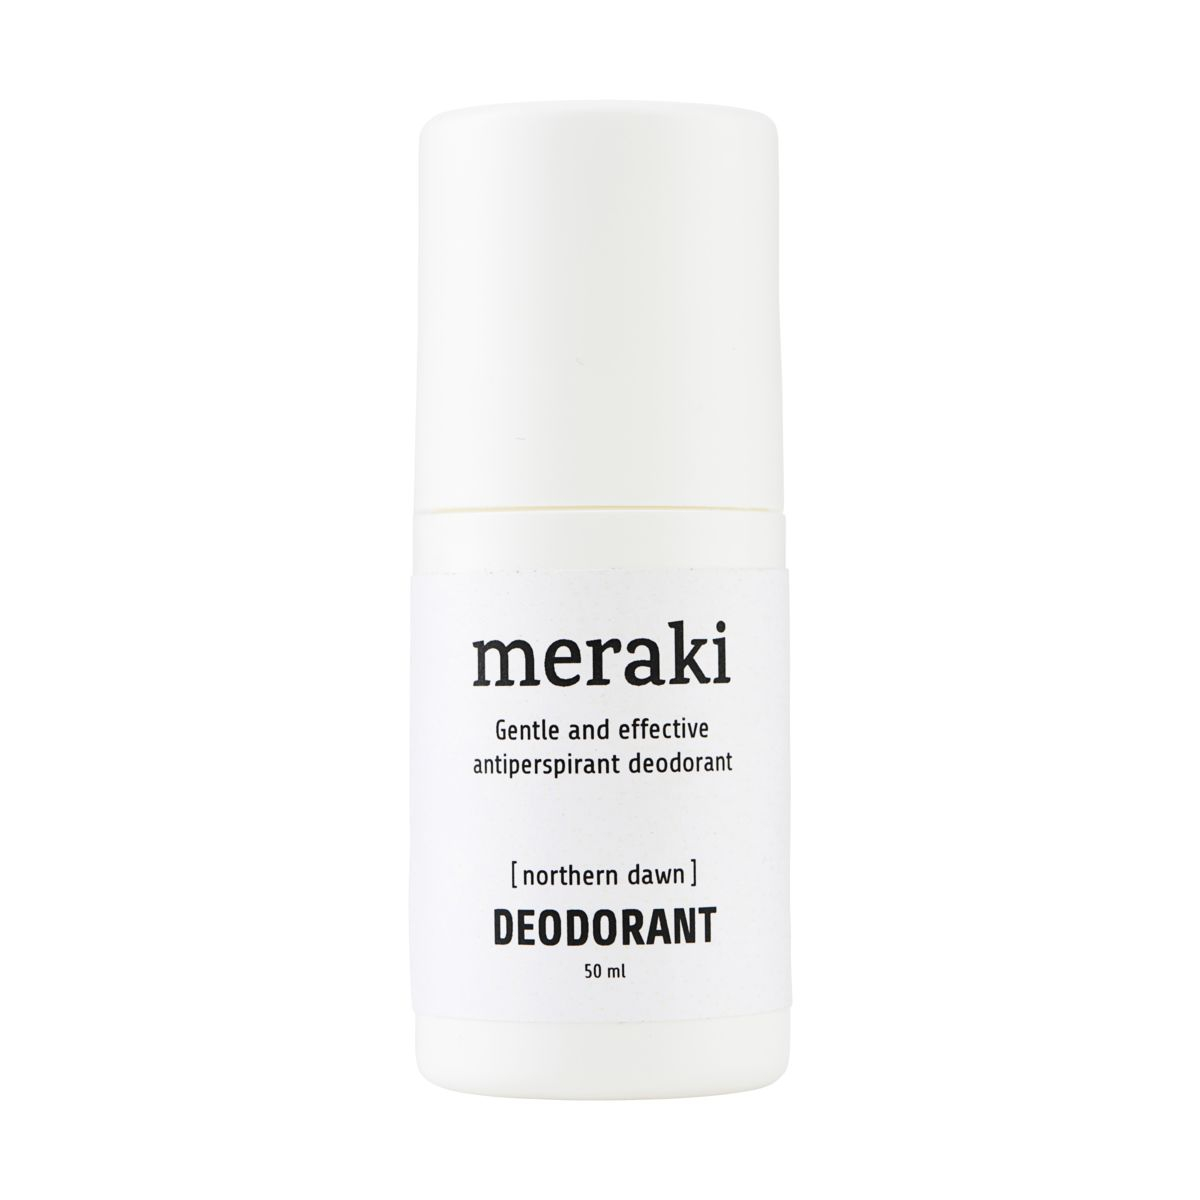 Meraki - Deodorant, northern dawn